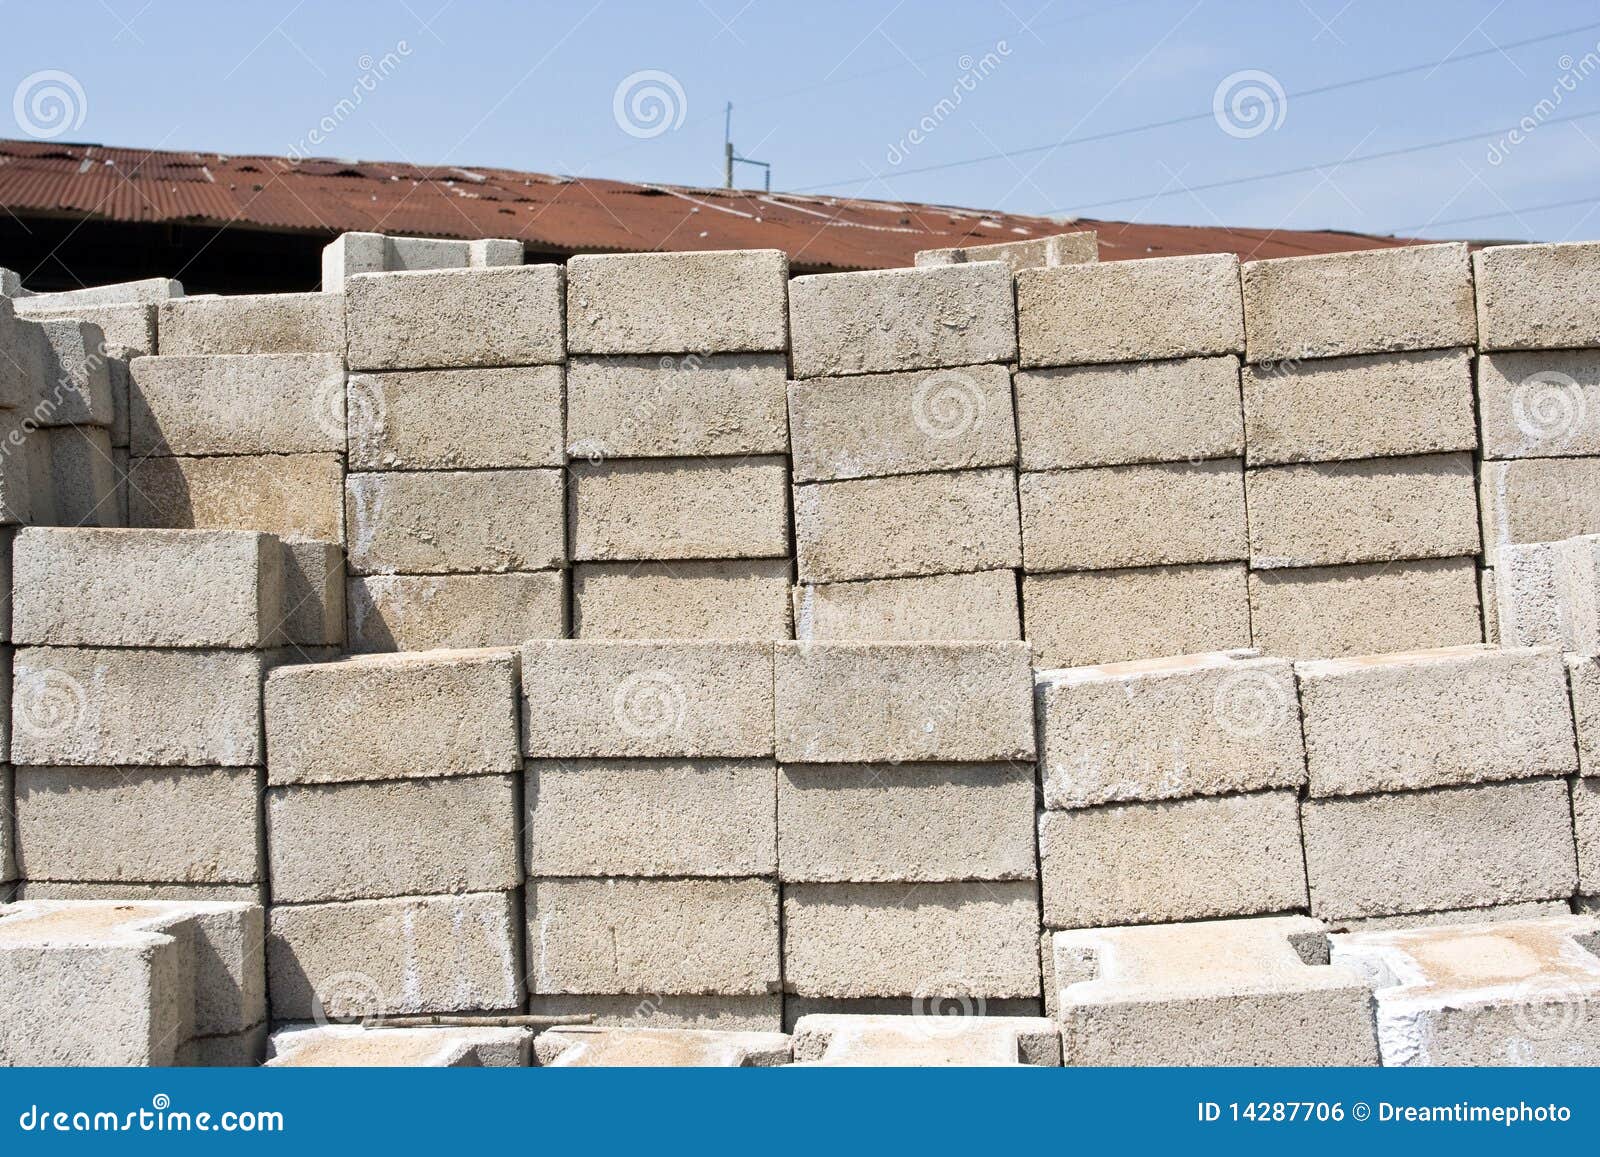 Cement block stock photo. Image of concrete, architecture - 14287706